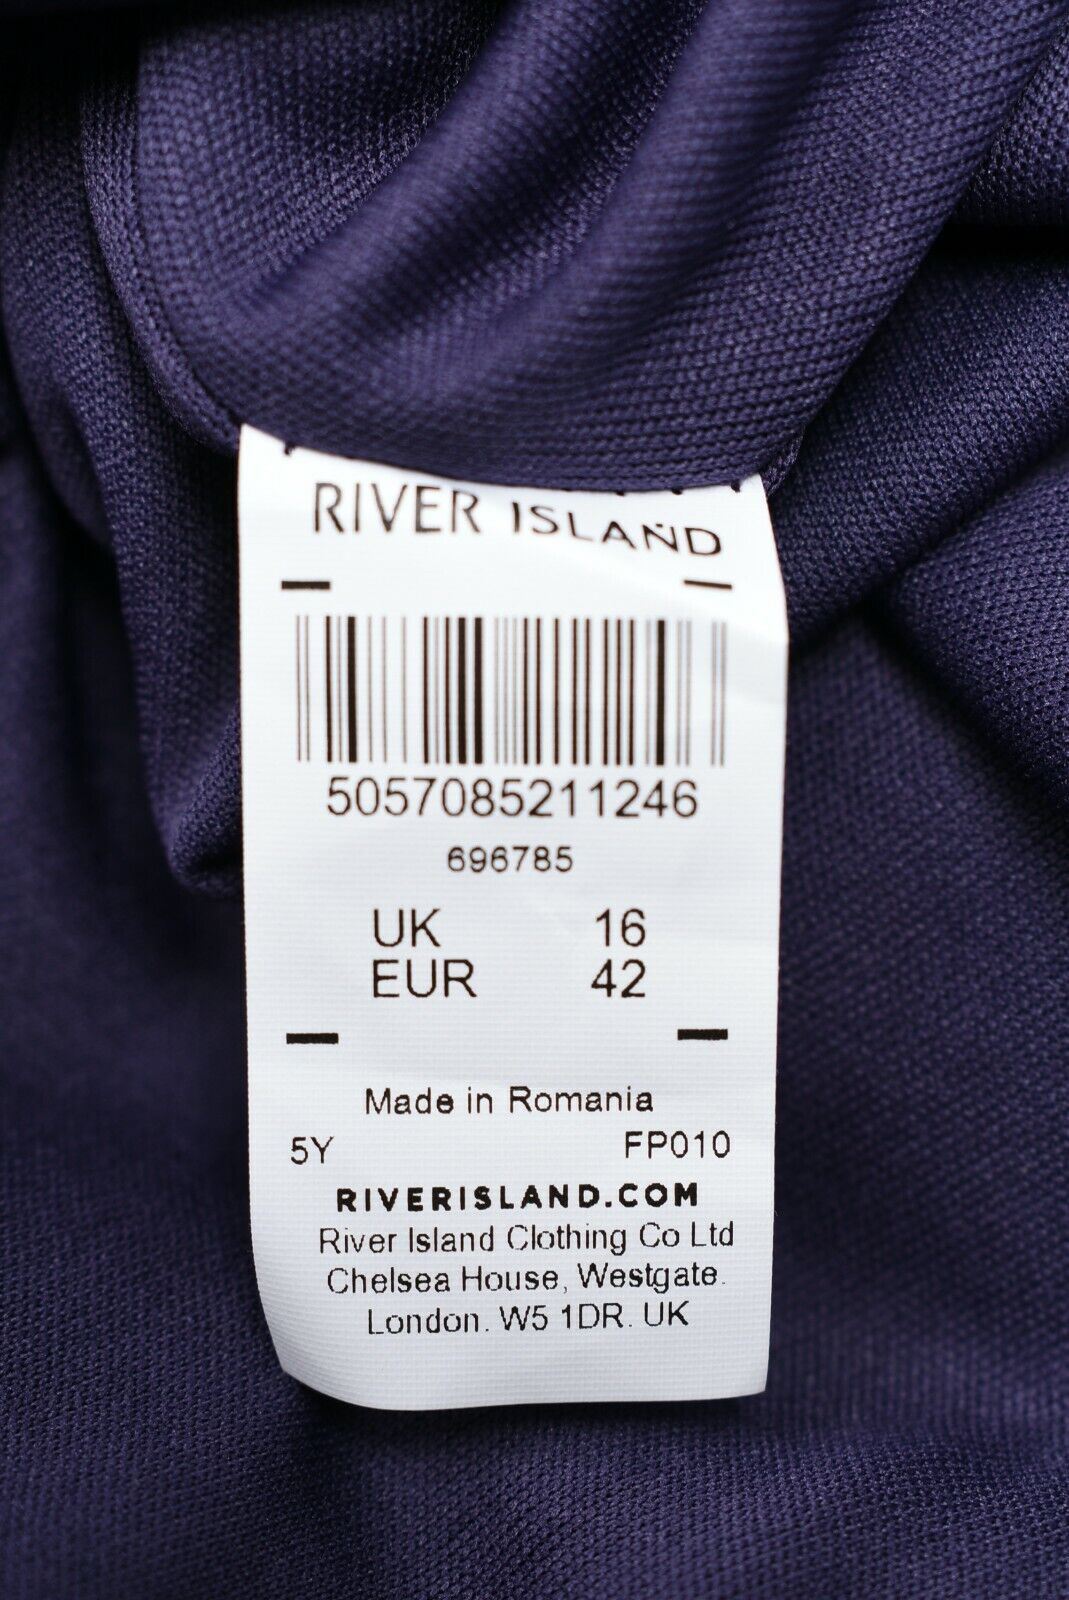 RIVER ISLAND Women's Cut Out Dress, Navy Blue, size UK 16